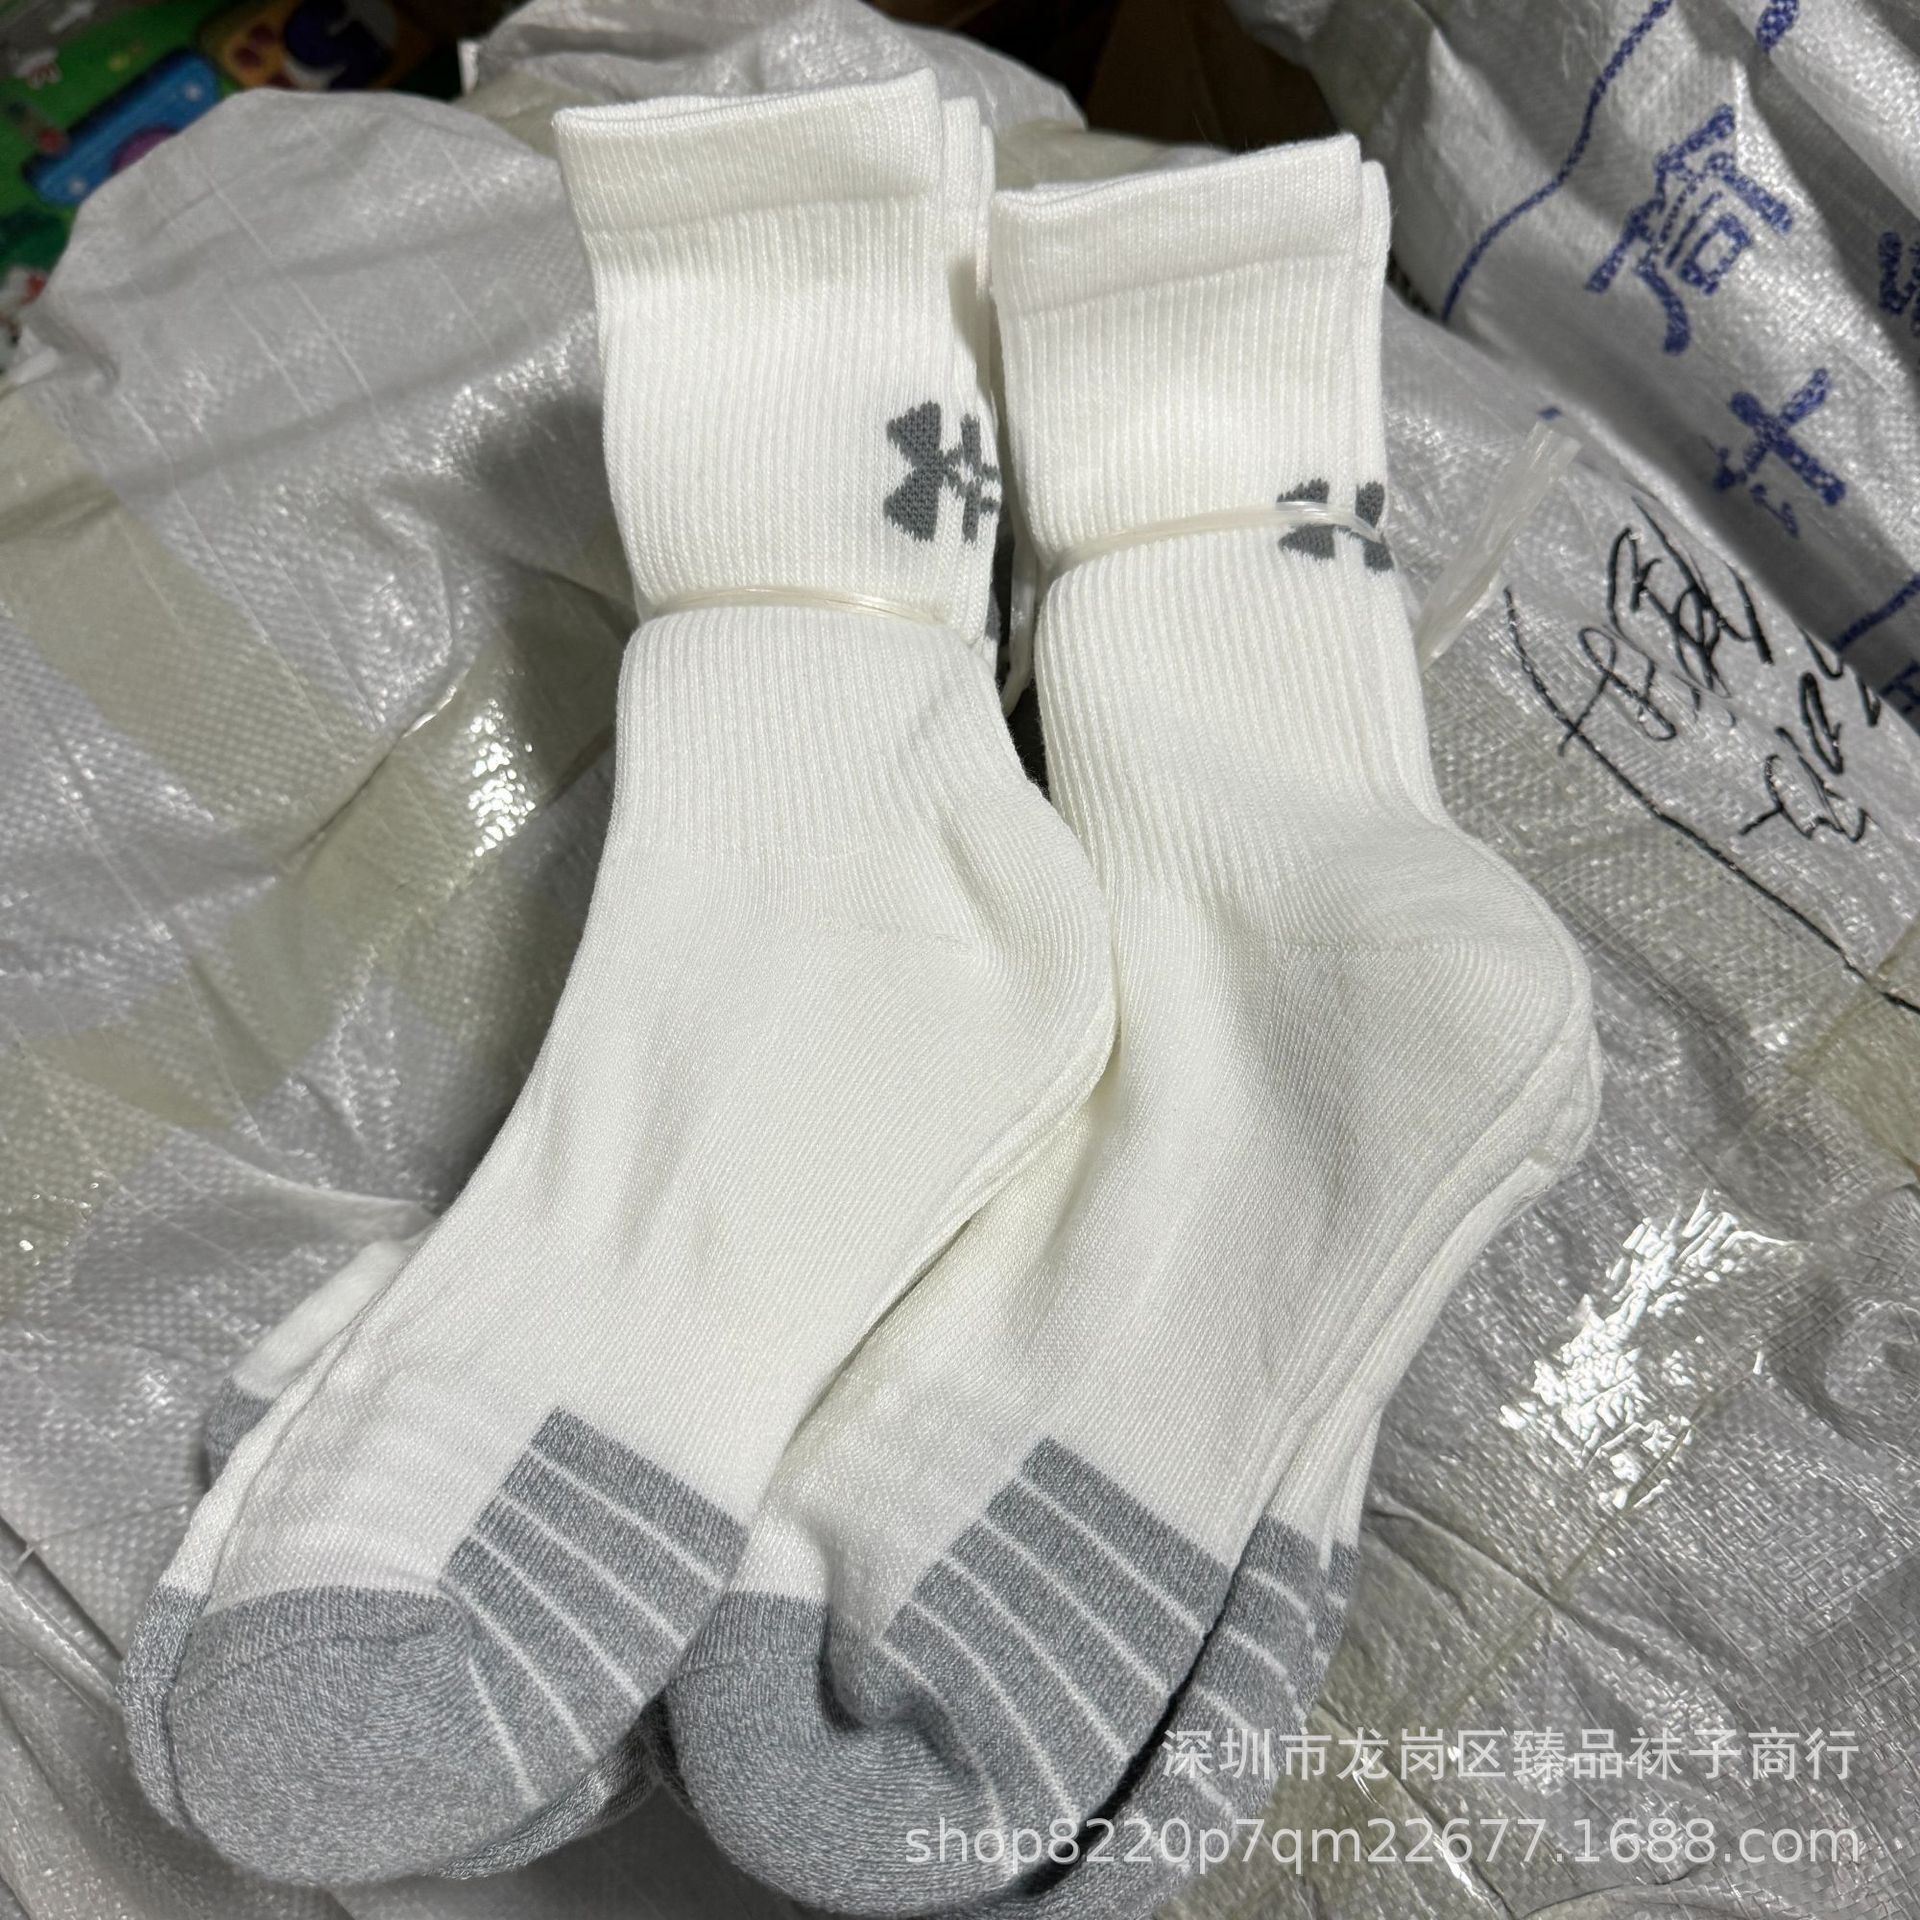 Youa Basketball Socks Thick Towel Bottom Men's Breathable Sweat-Wicking Athletic Socks Running Training Socks Women's Mid-Calf